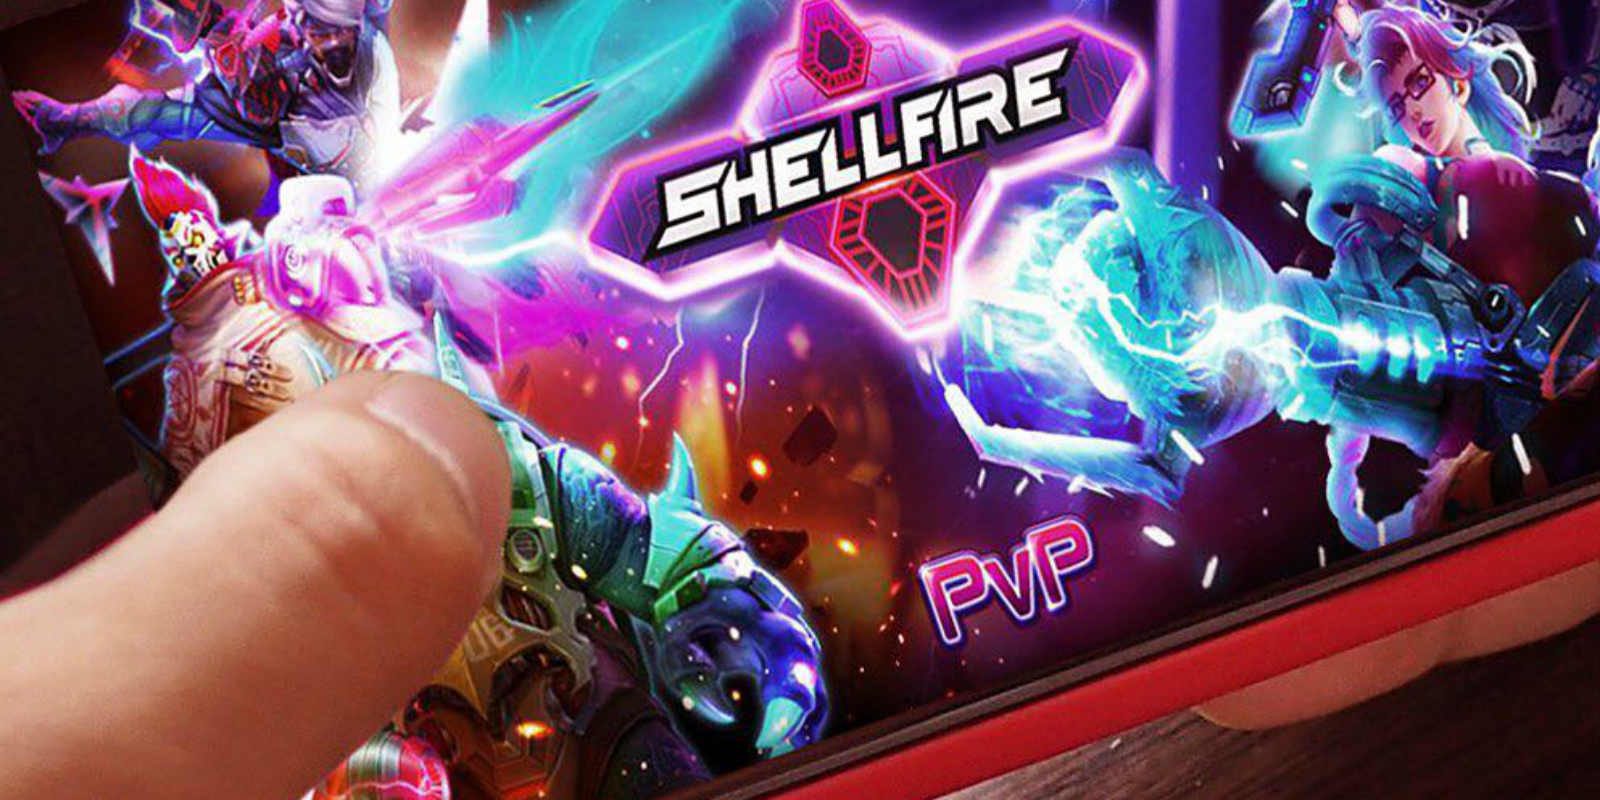 Shellfire Open Tournament, Total Hadiah 1 Miliar!